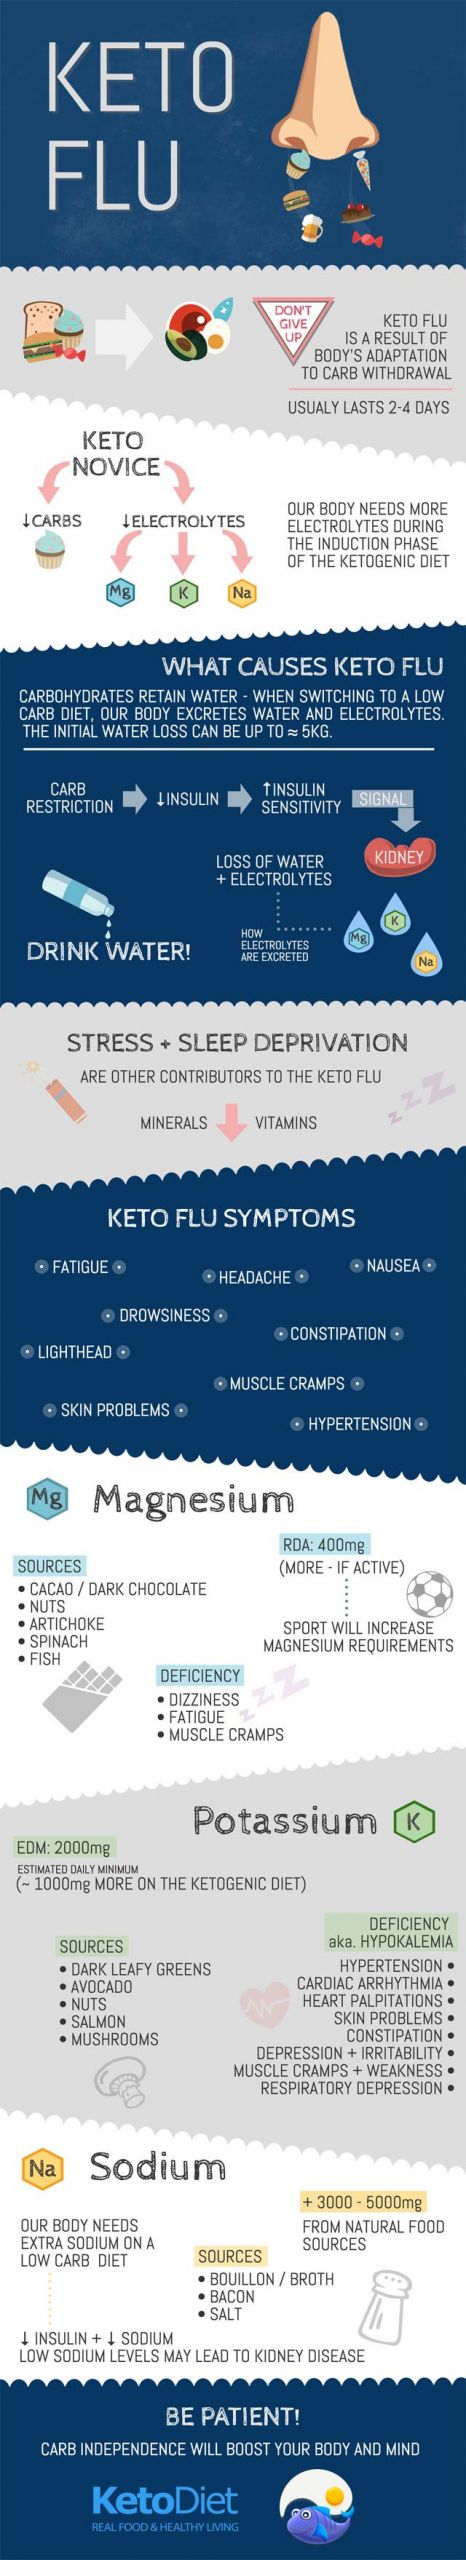 Keto Diet Symptoms
 Quick Guide to Keto flu Reme s